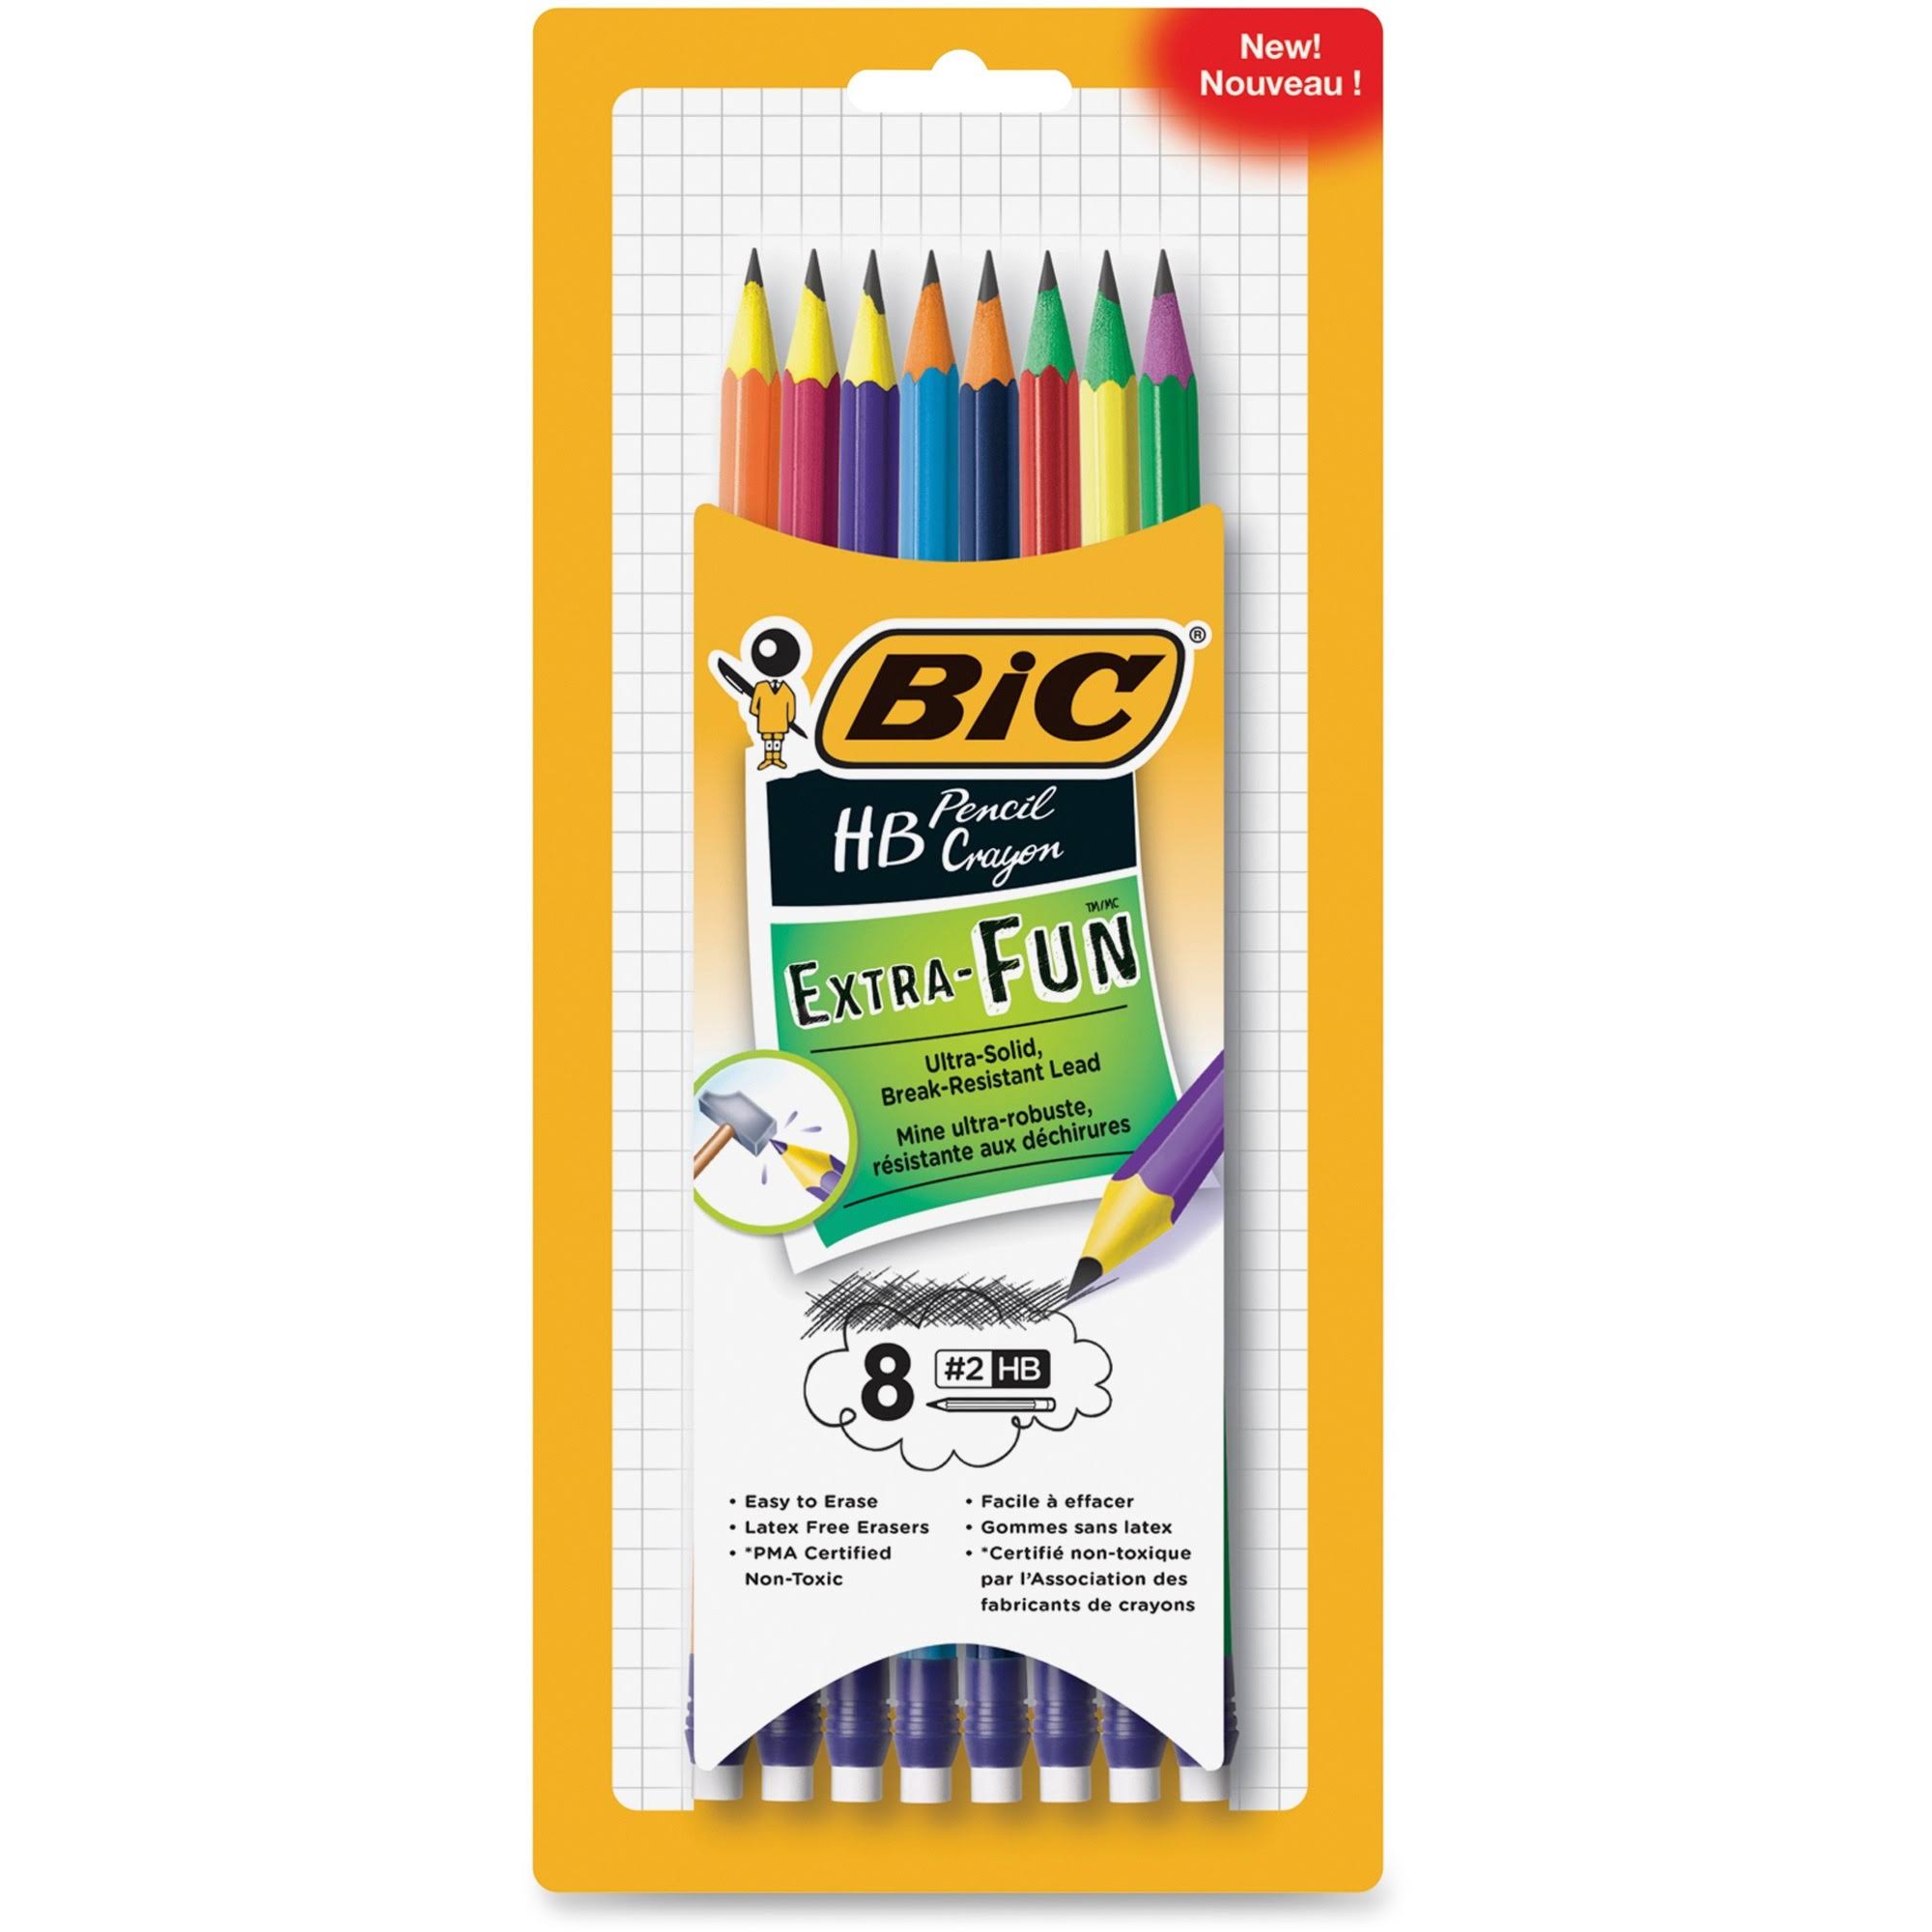 BIC Extra Fun HB Pencils